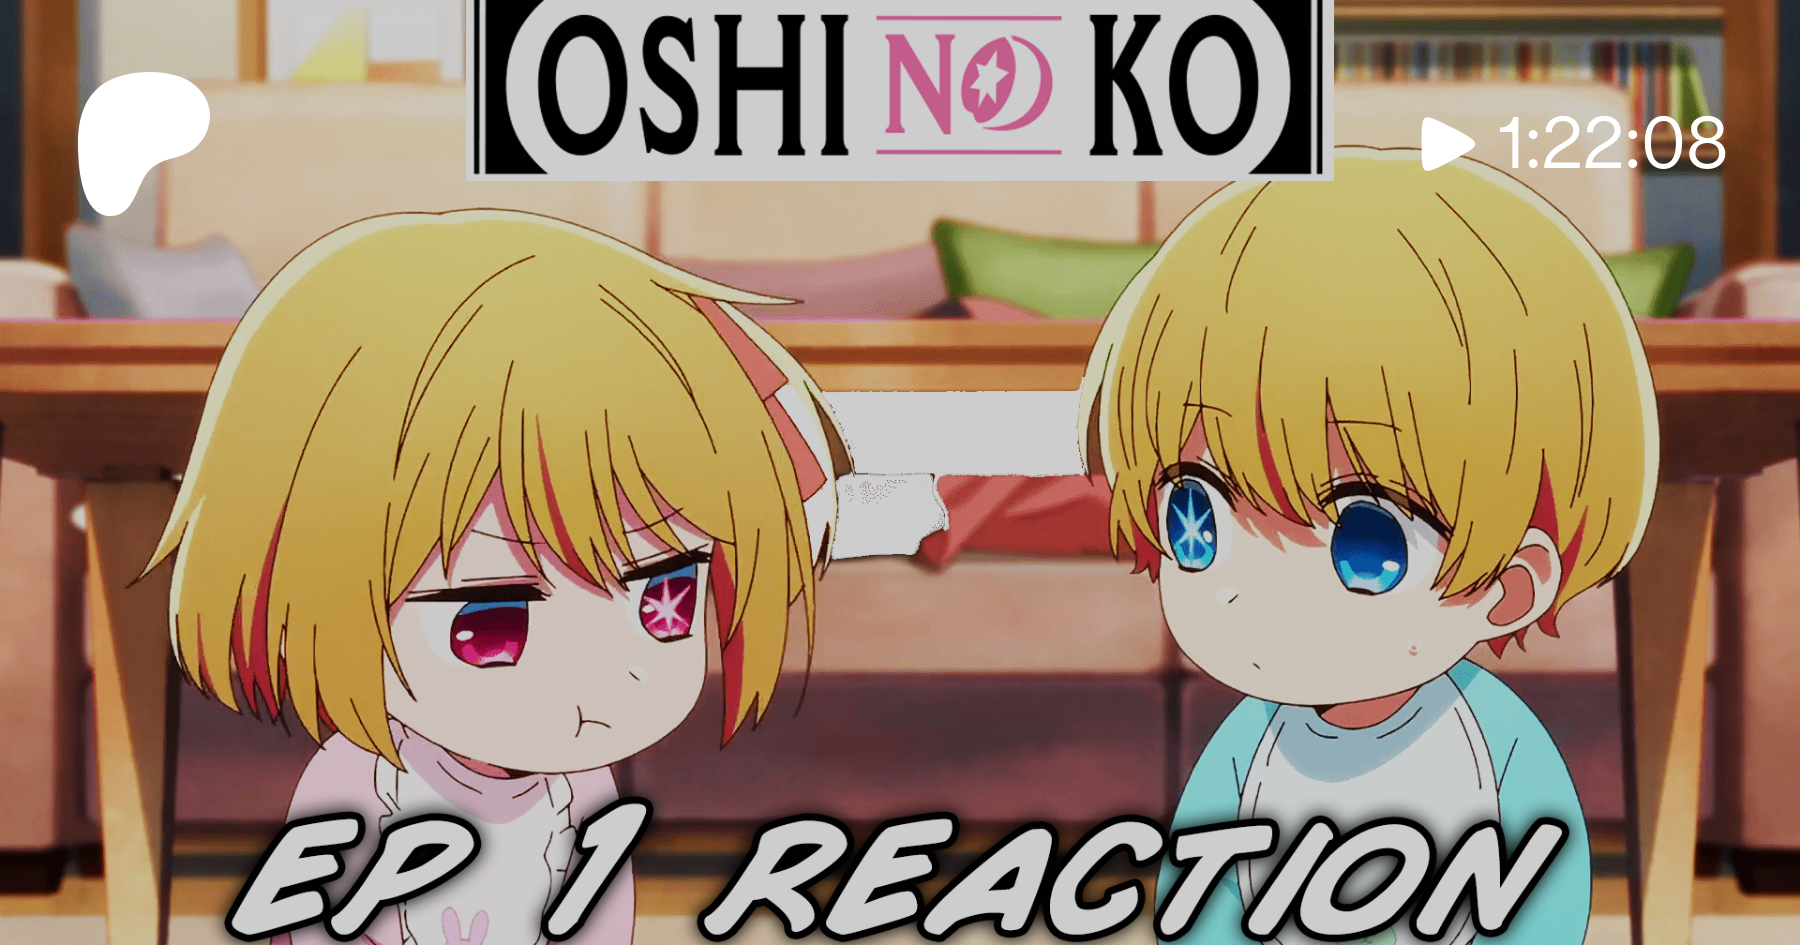 Oshi no Ko Ep 5 by drumrolltonyreacts from Patreon